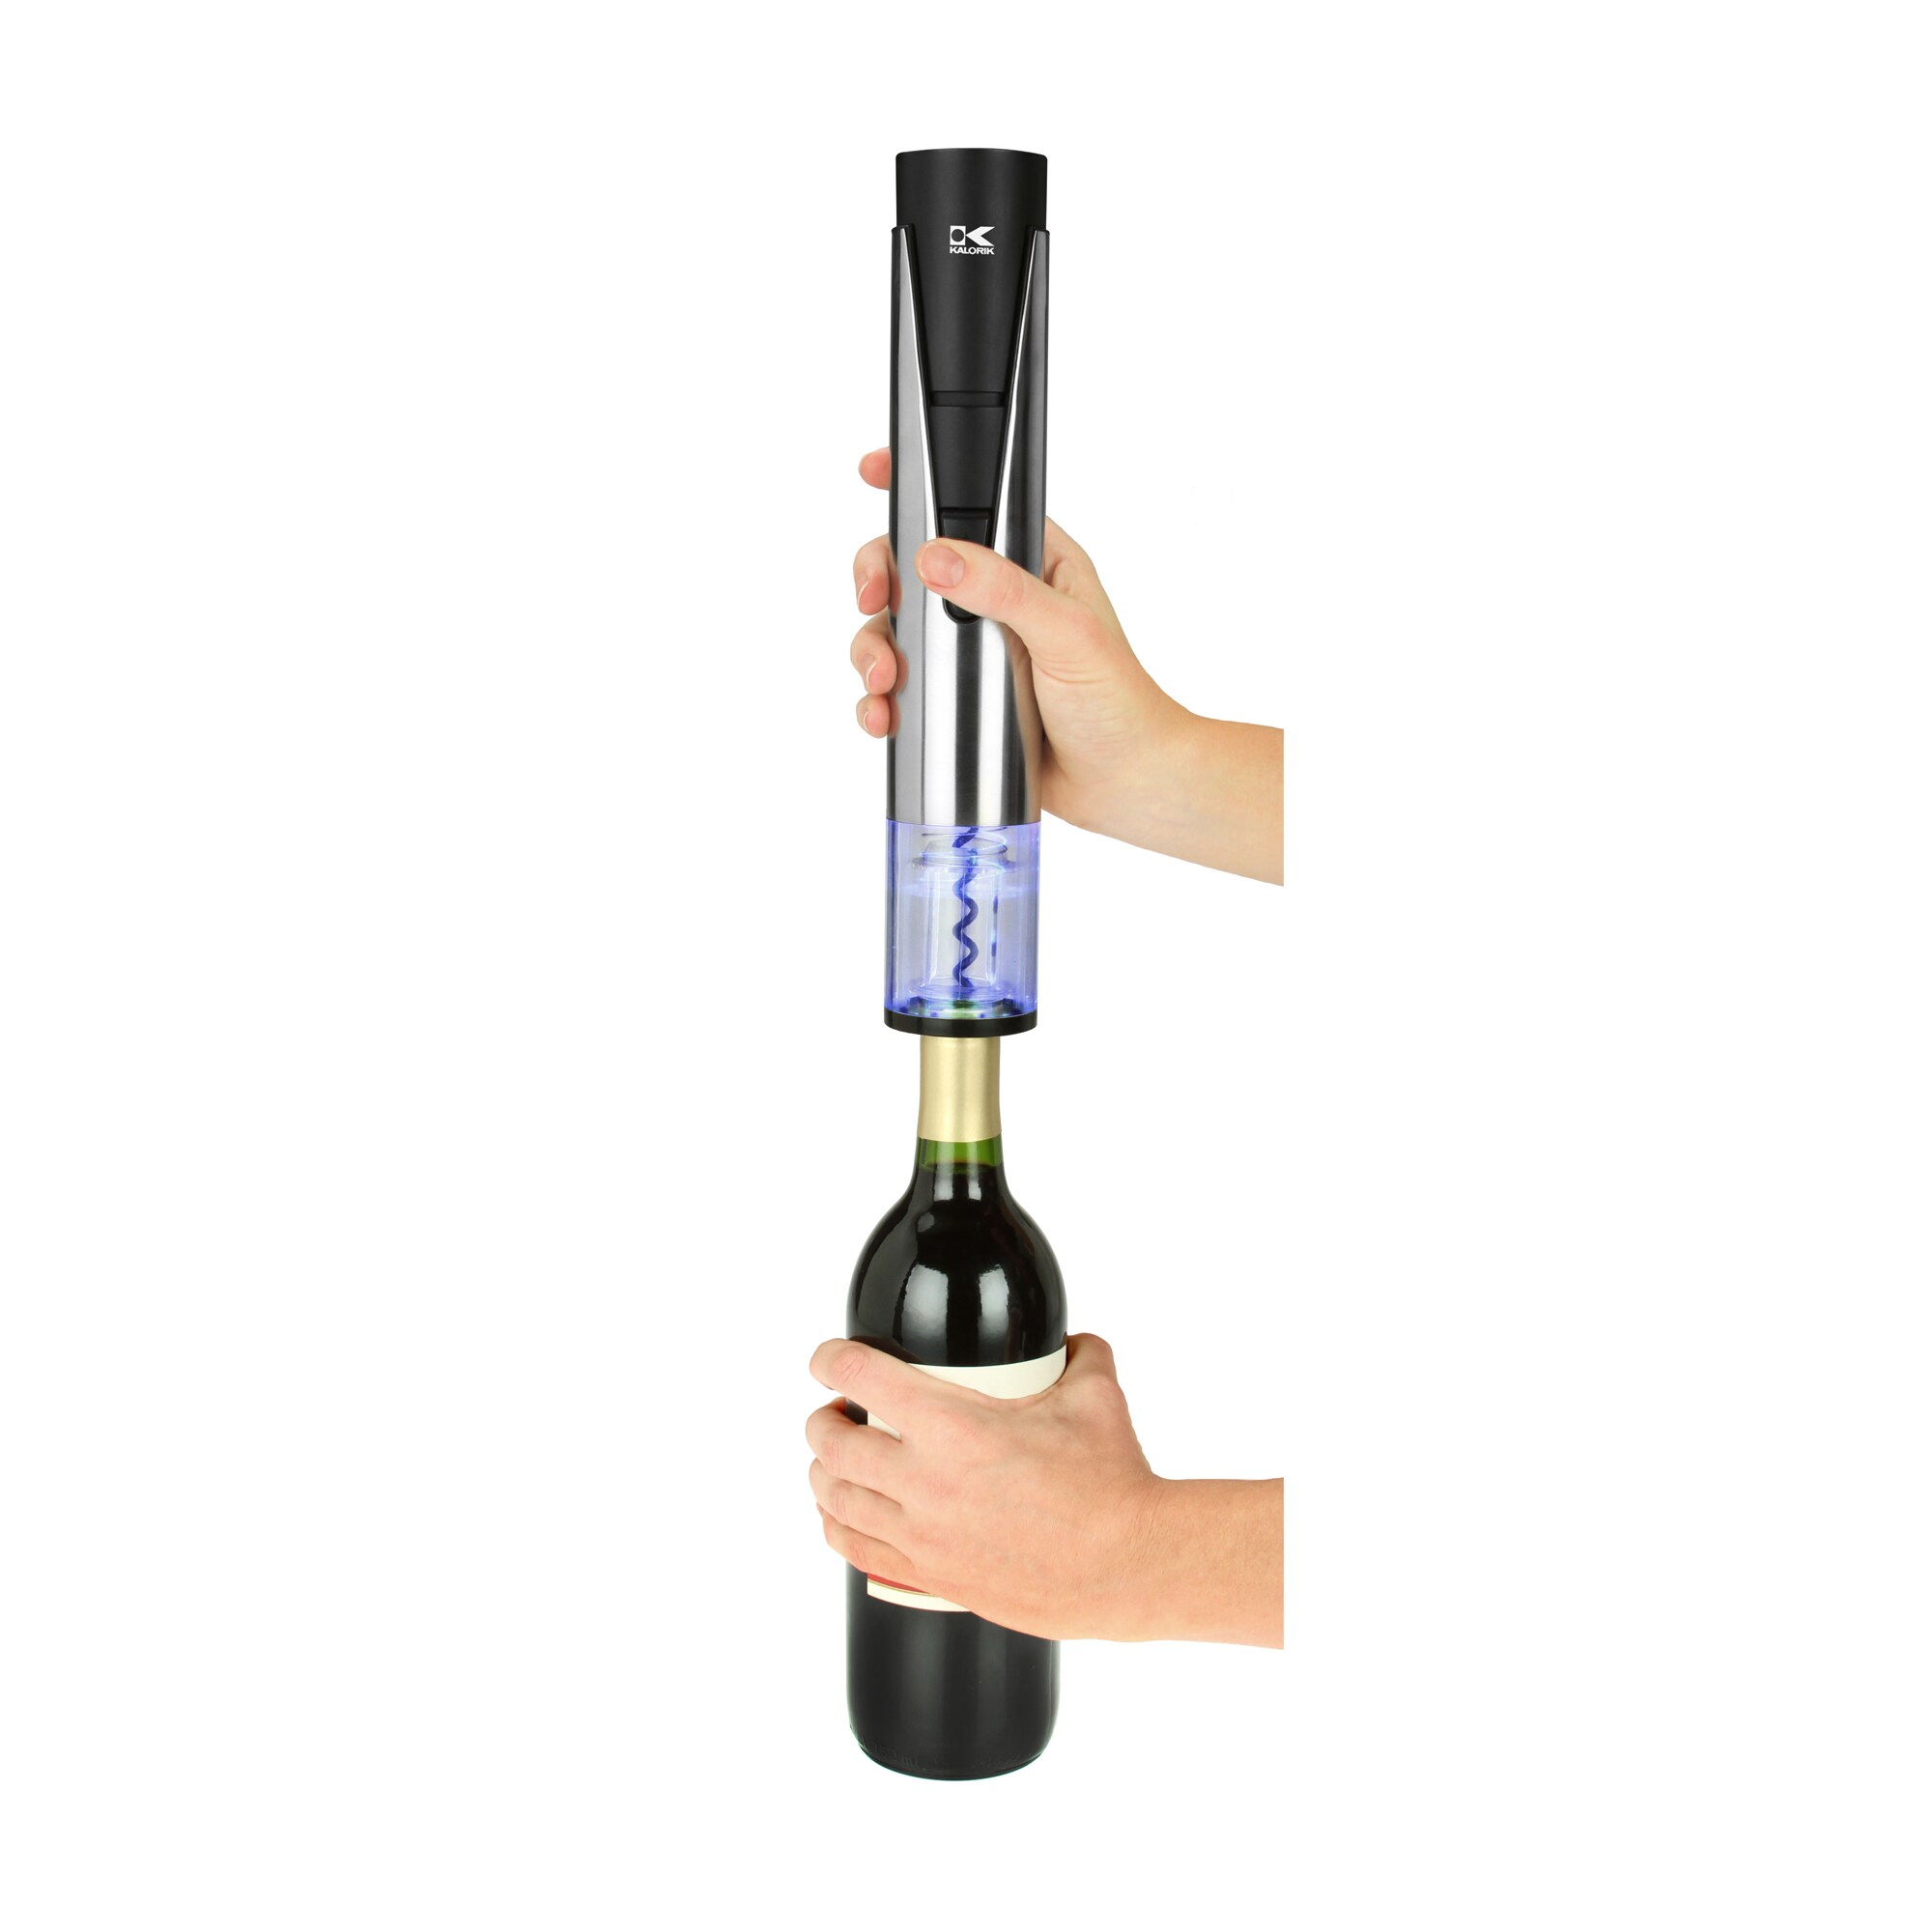 Kalorik Stainless Steel Electric Wine Bottle Opener